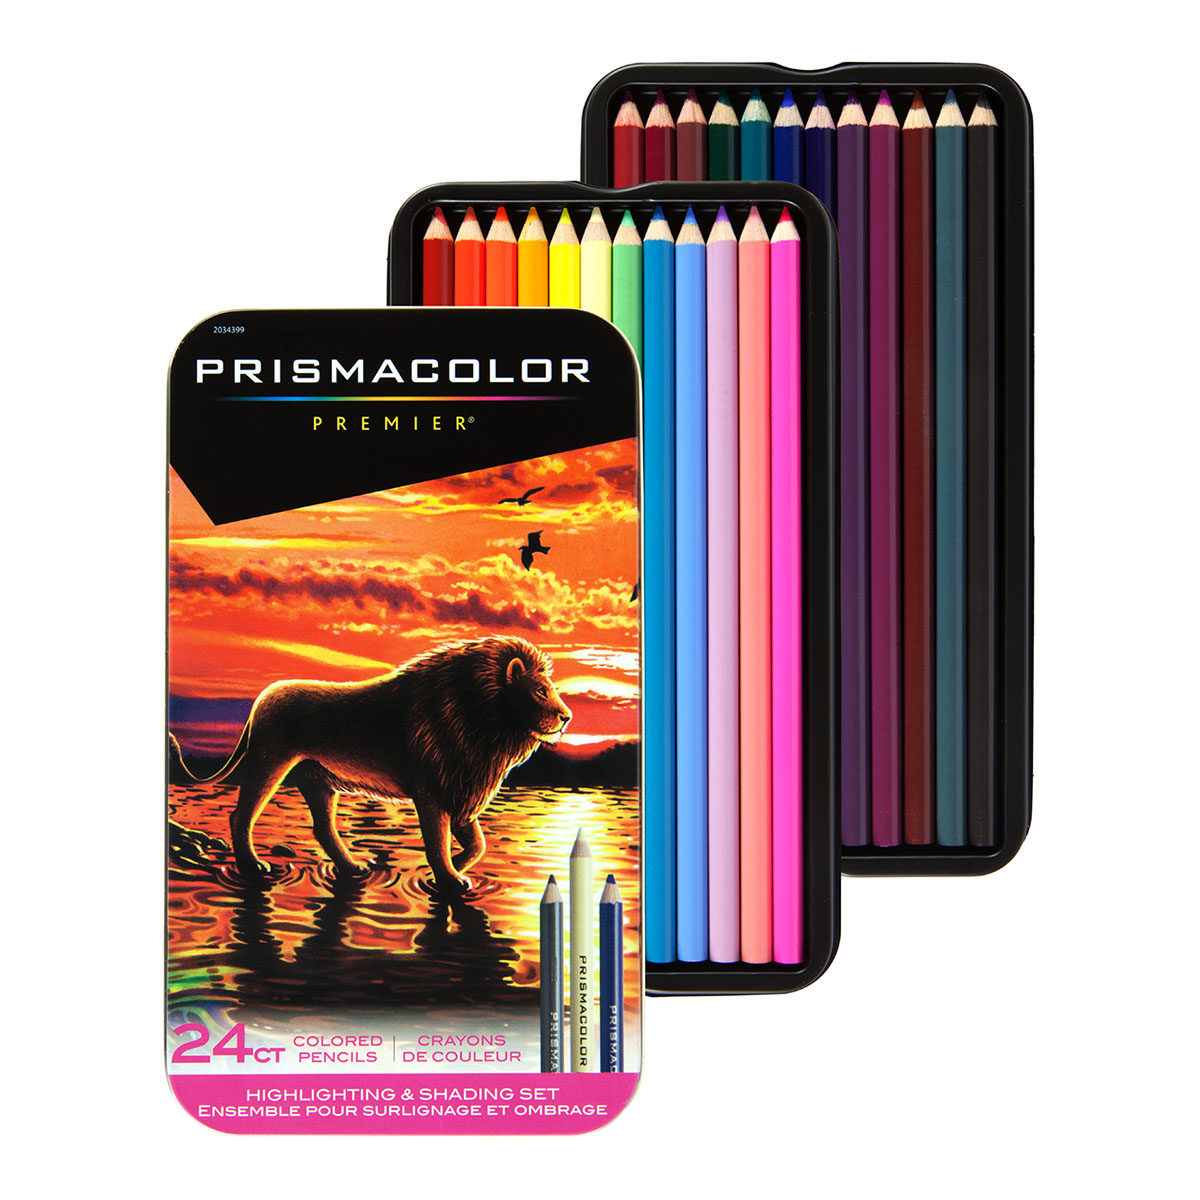 Prismacolor Premier Colored Pencils 24 set, Highlighting & Shading